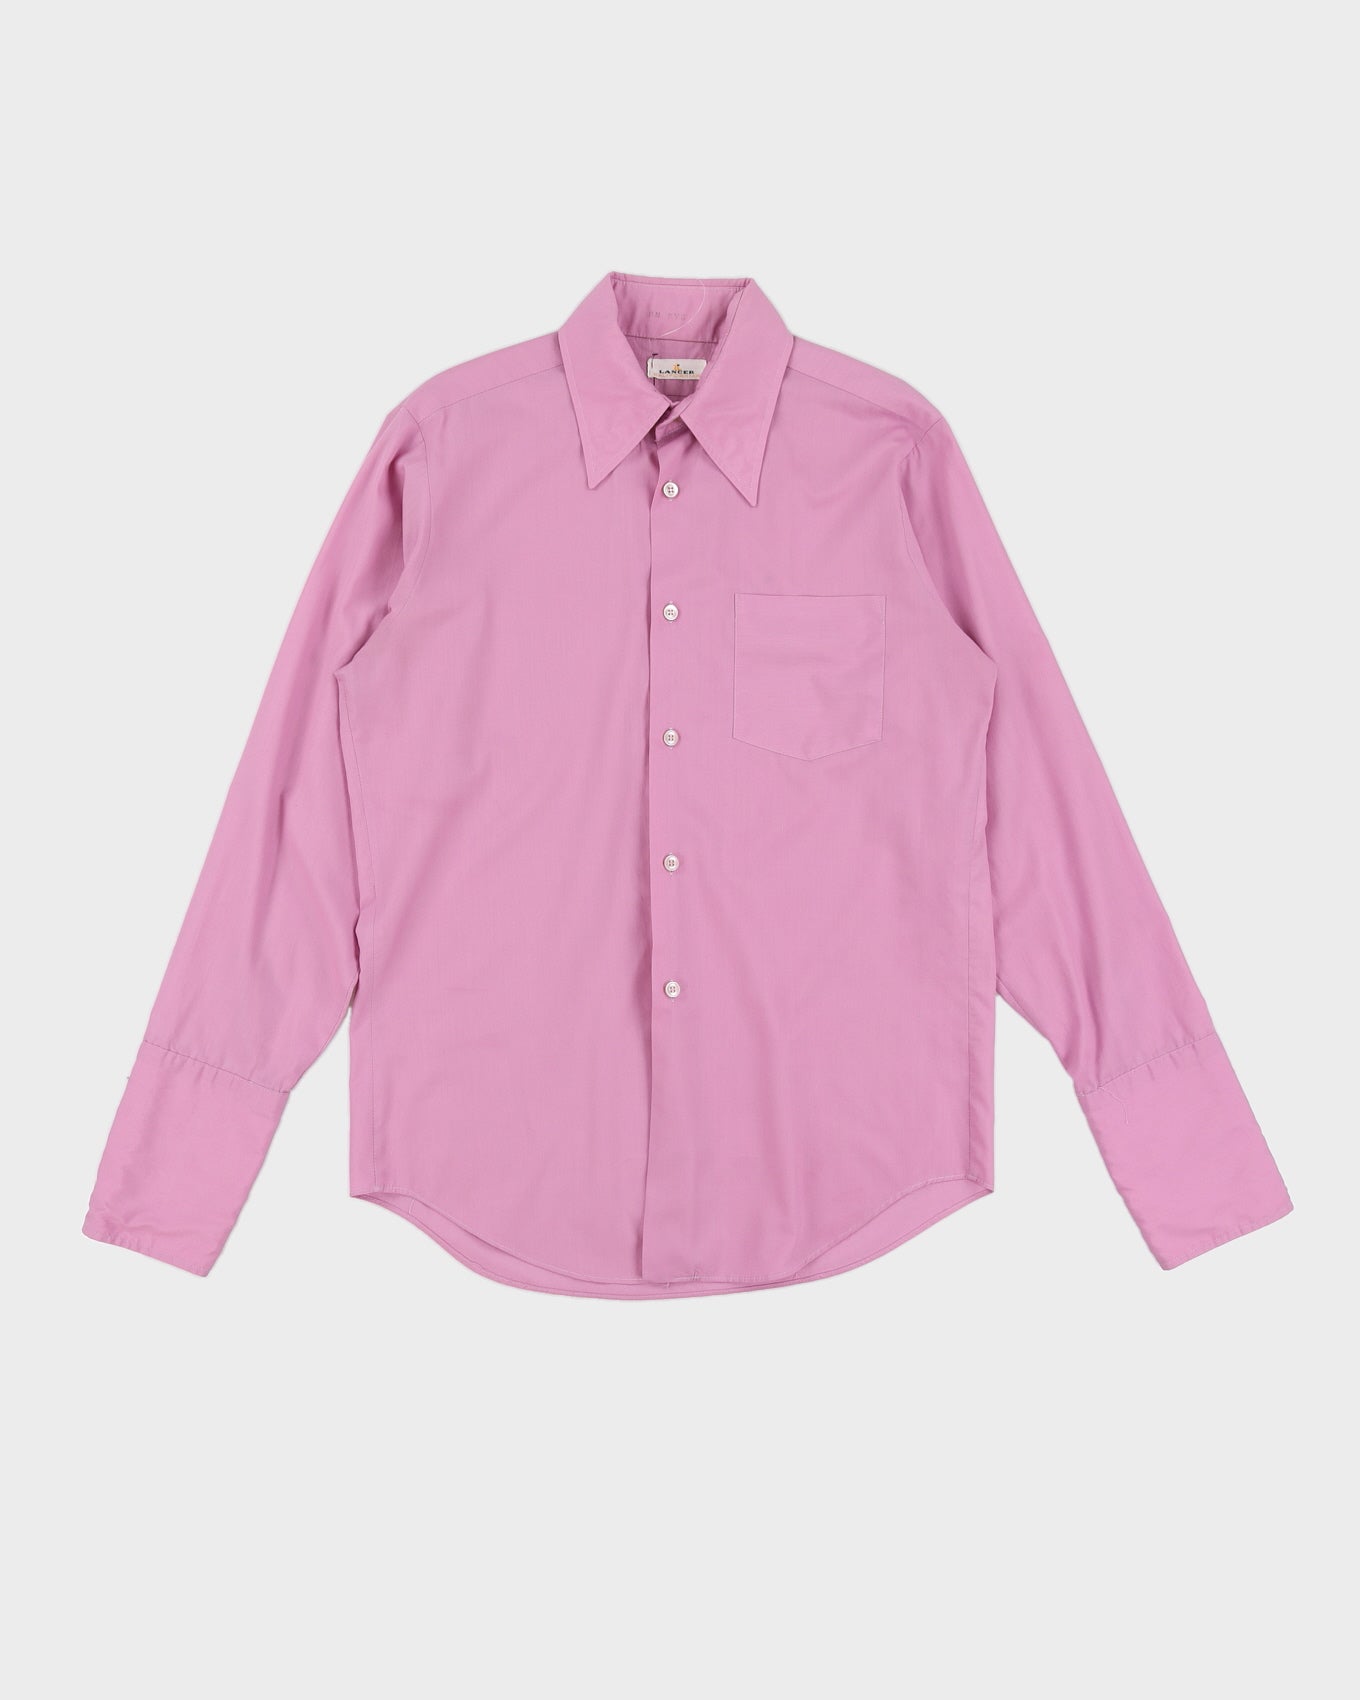 Vintage 70s Lancer California Purple Long Sleeve Shirt - M